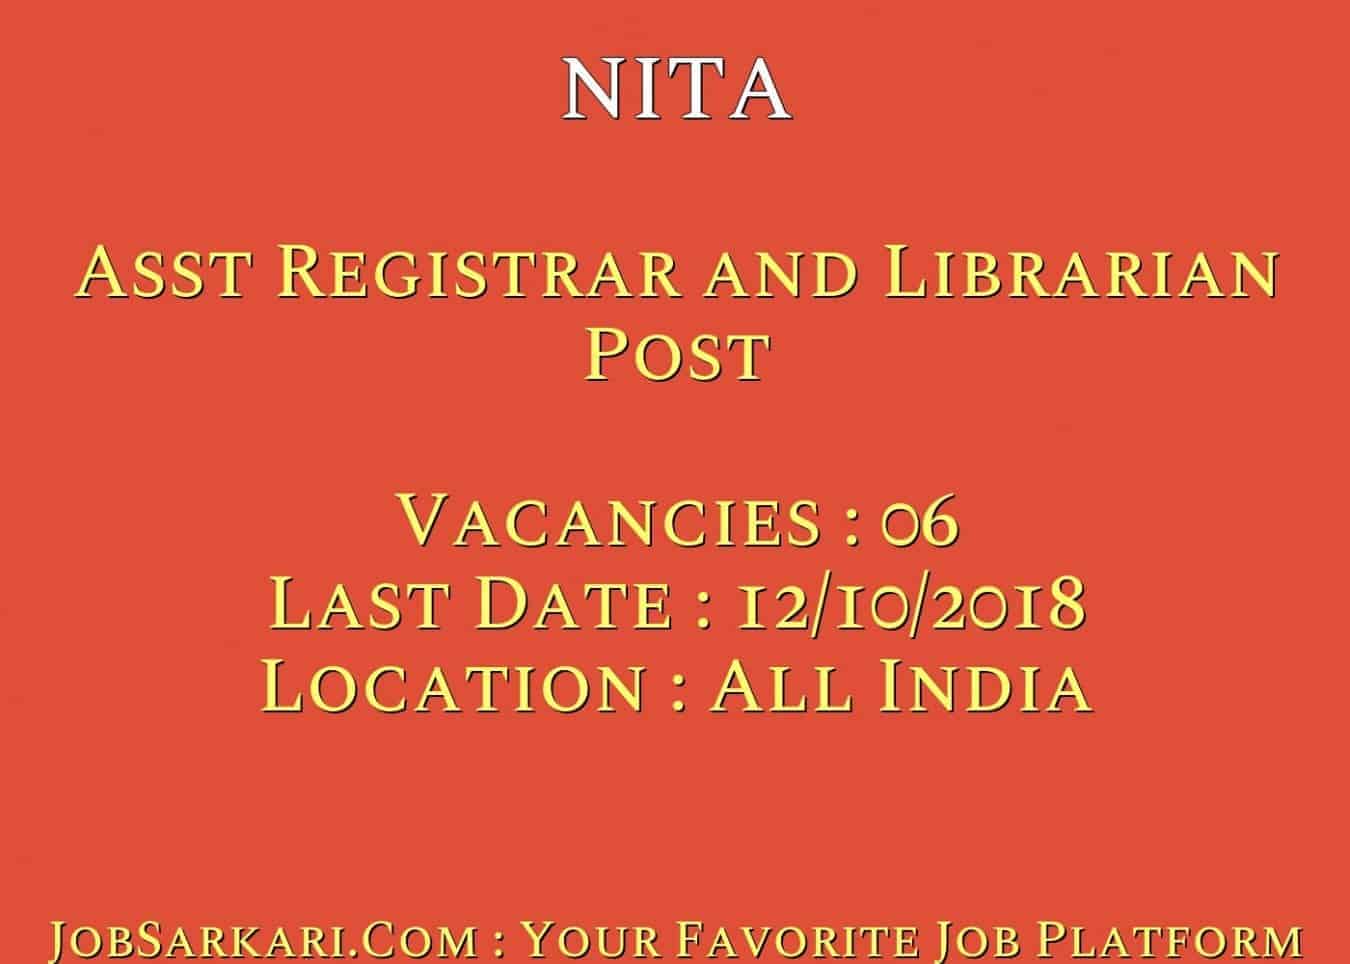 NITA Recruitment 2018 for Asst Registrar and Librarian Post